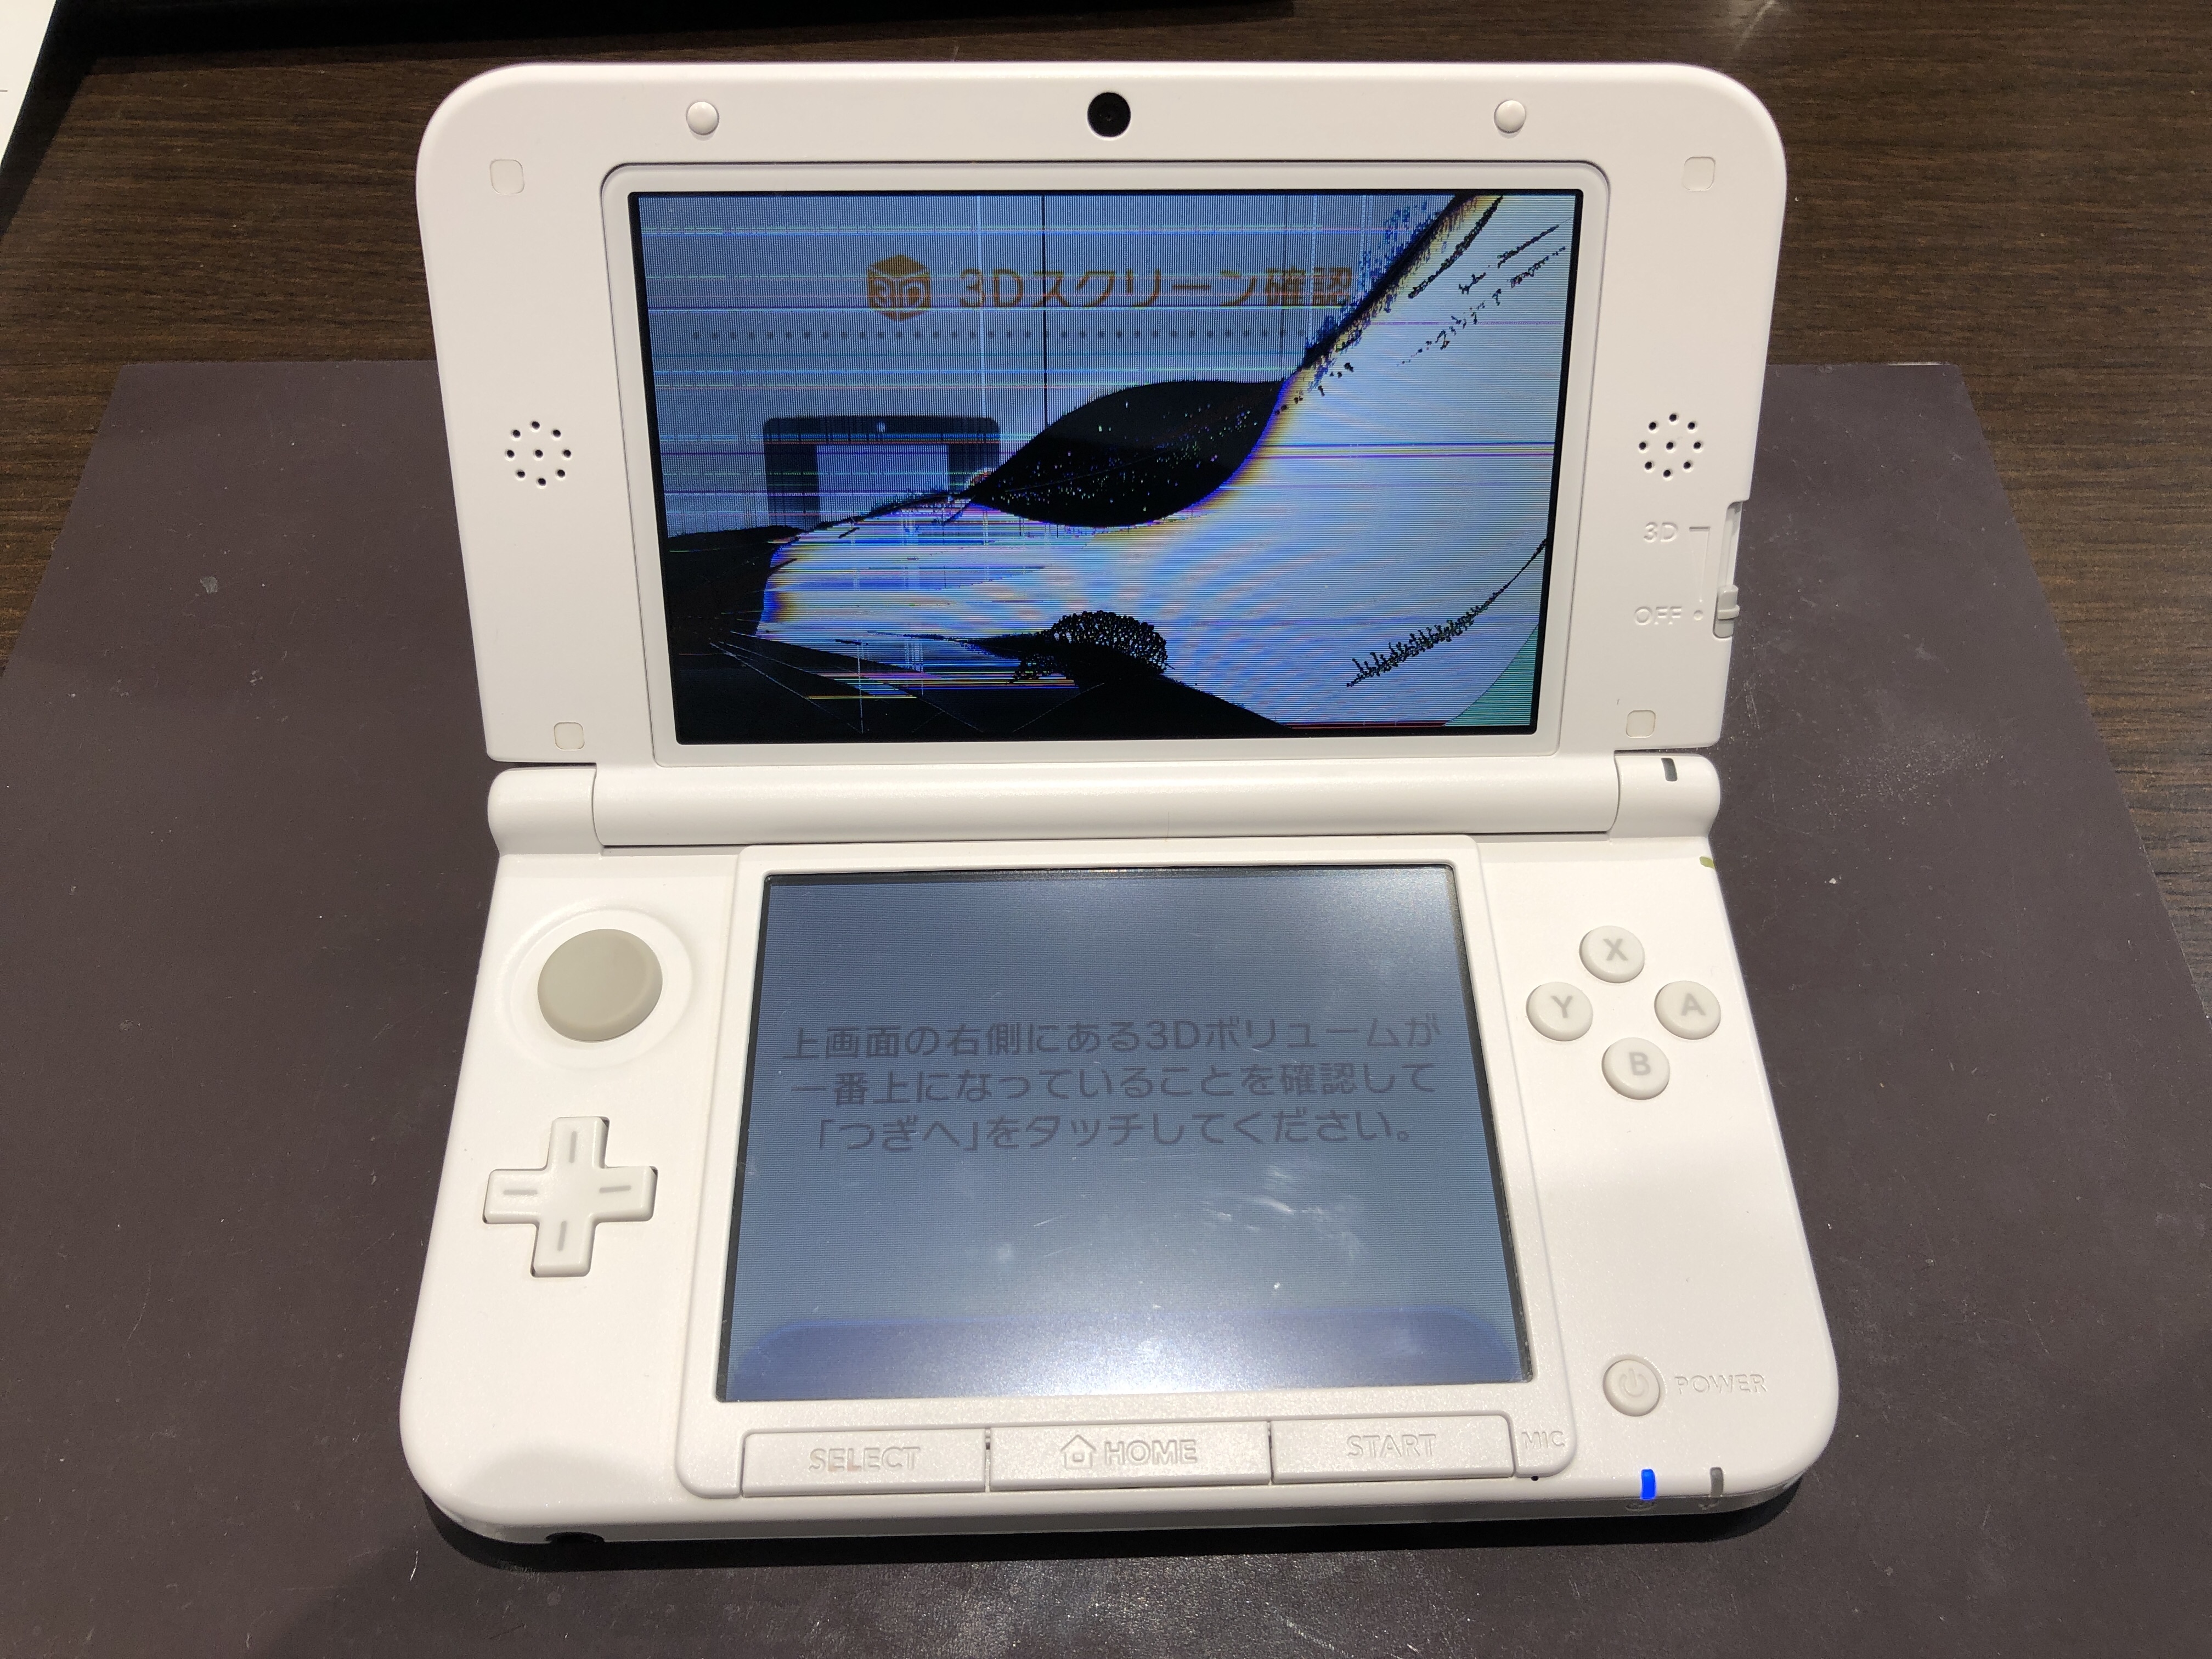 3DS】3DS LLの液晶修理、スマホスピタルなら対応可能です！ Switch・Nintendo3DS ・ PSP 修理のゲームホスピタル  |Switch Nintendo3DS(ニンテンドーDS) PSP 修理